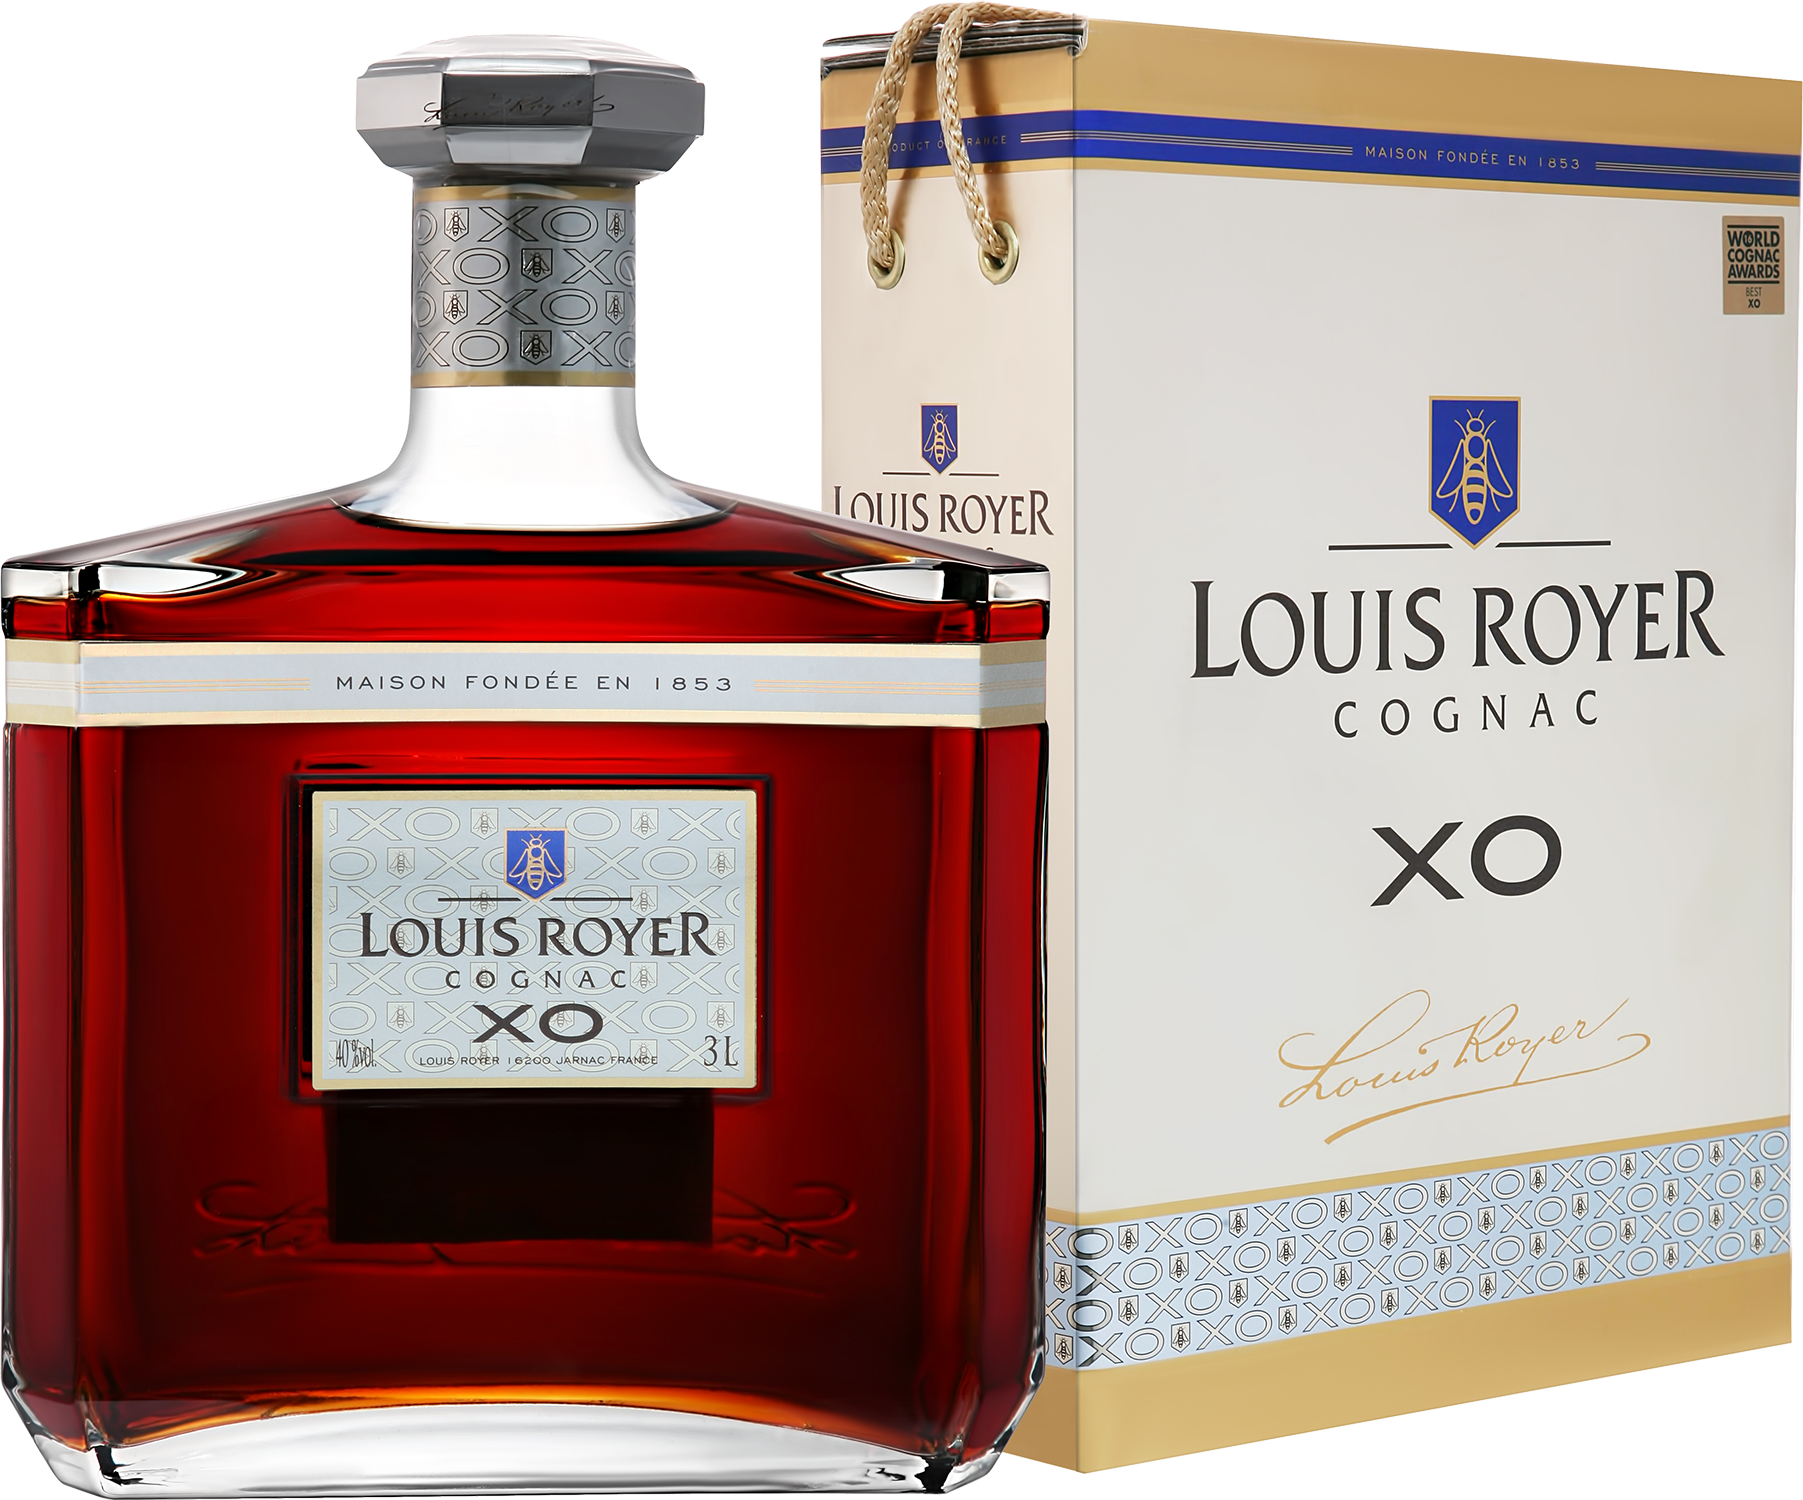 louis royer cognac xo gift box Louis Royer Cognac XO (gift box)